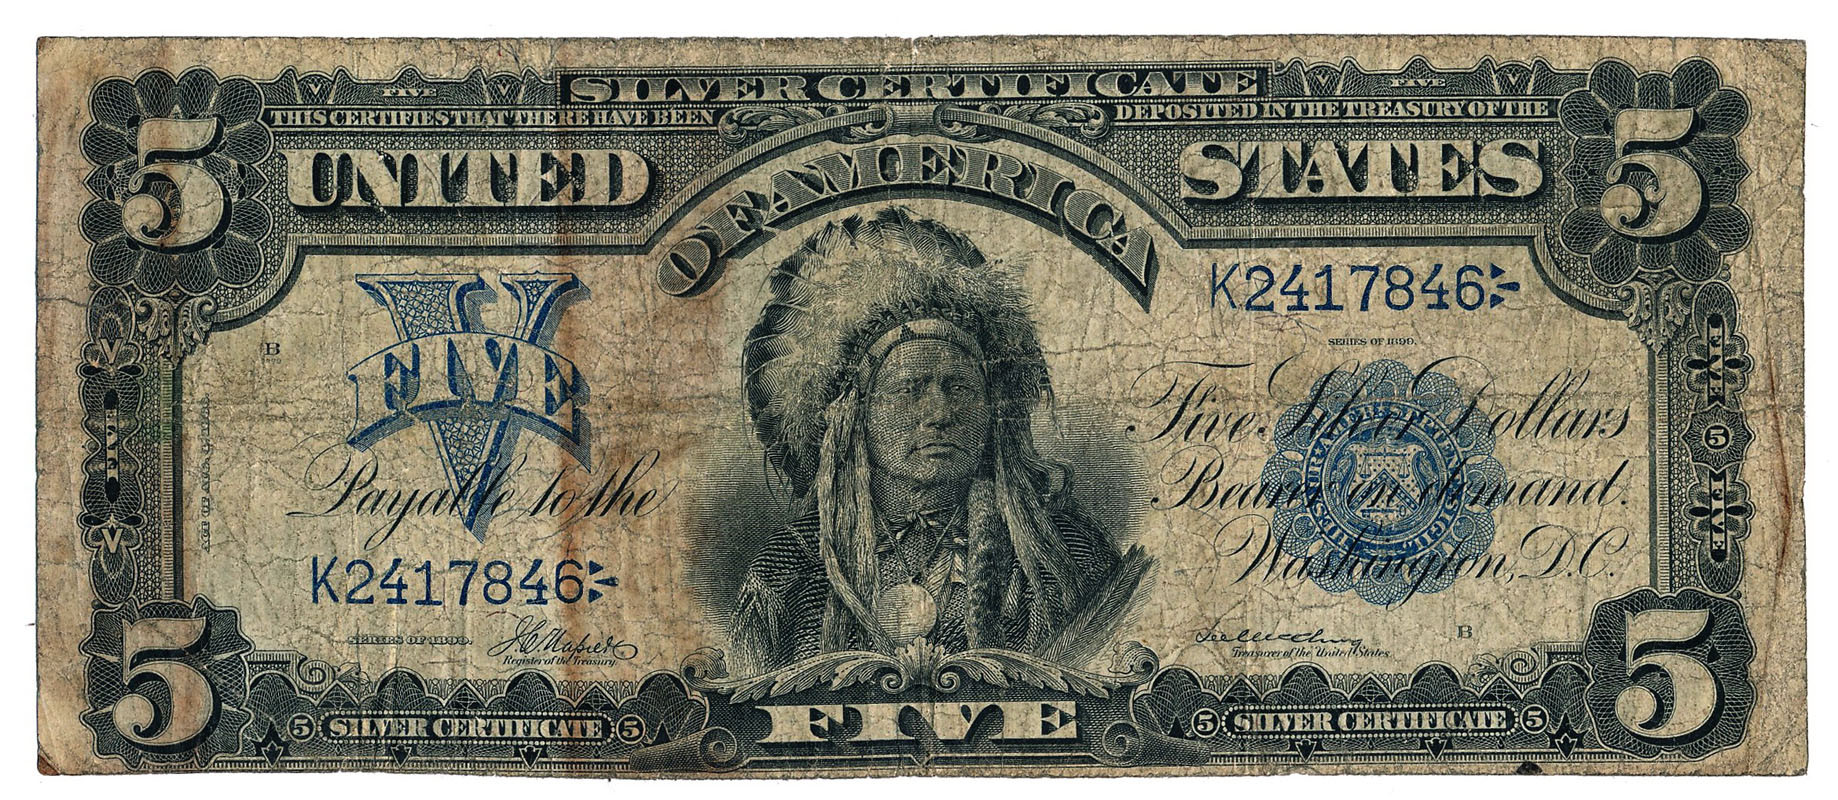 USA. 5 dolarów 1899 Silver Certificate, Large size, seria K